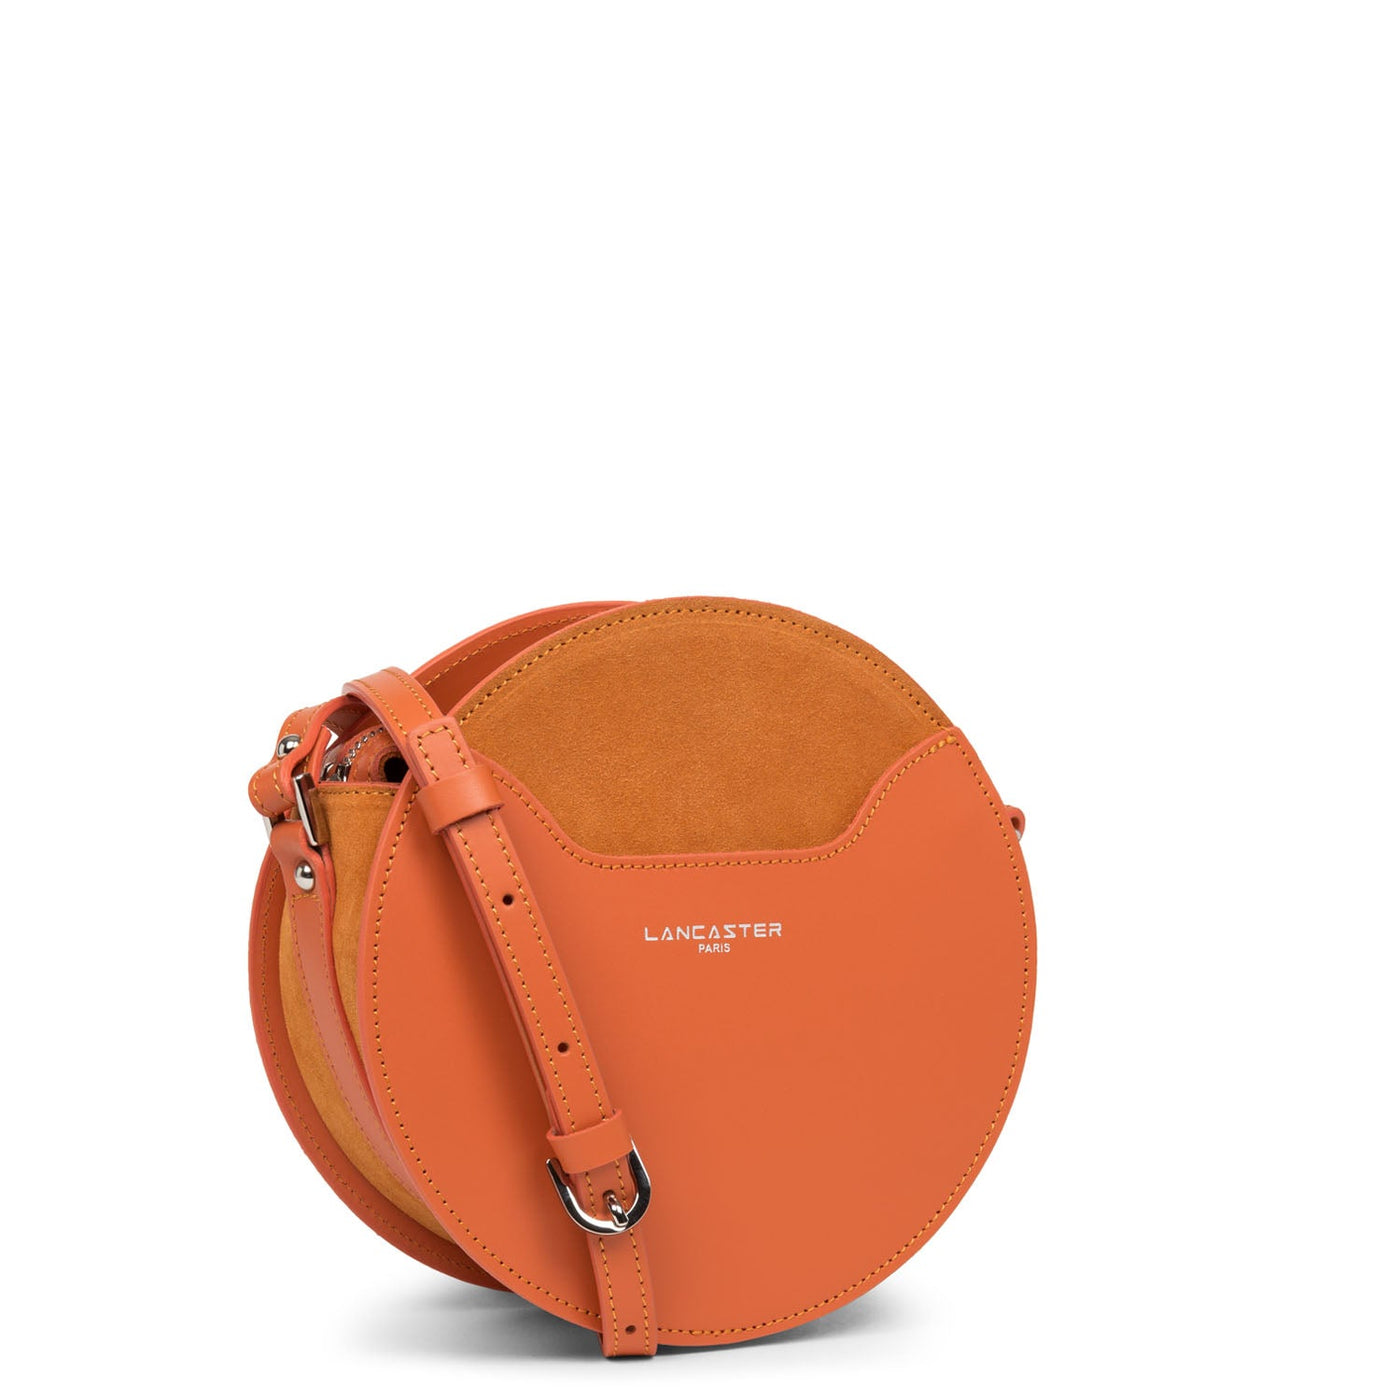 round bag - smooth lune #couleur_orange